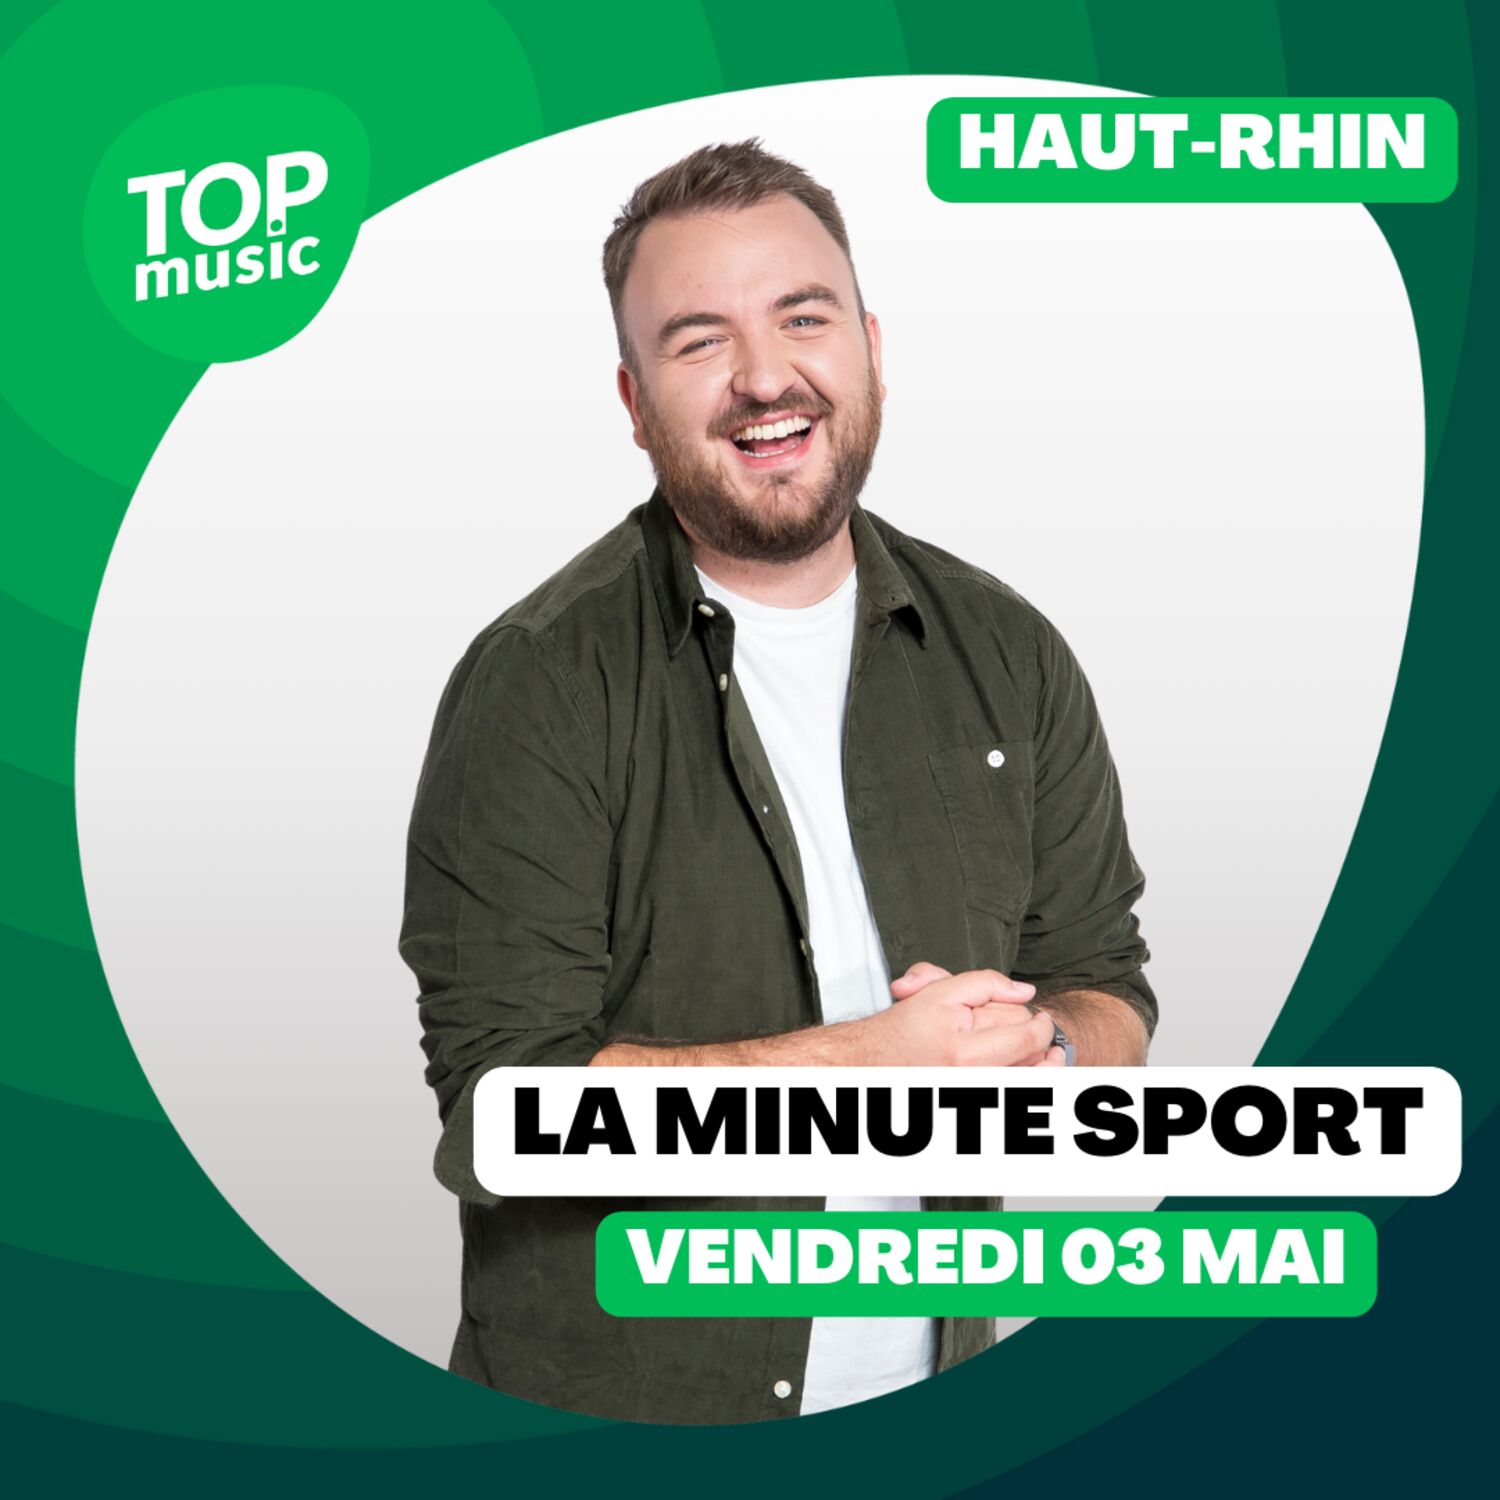 La Minute sport du Haut-Rhin - vendredi 03 mai